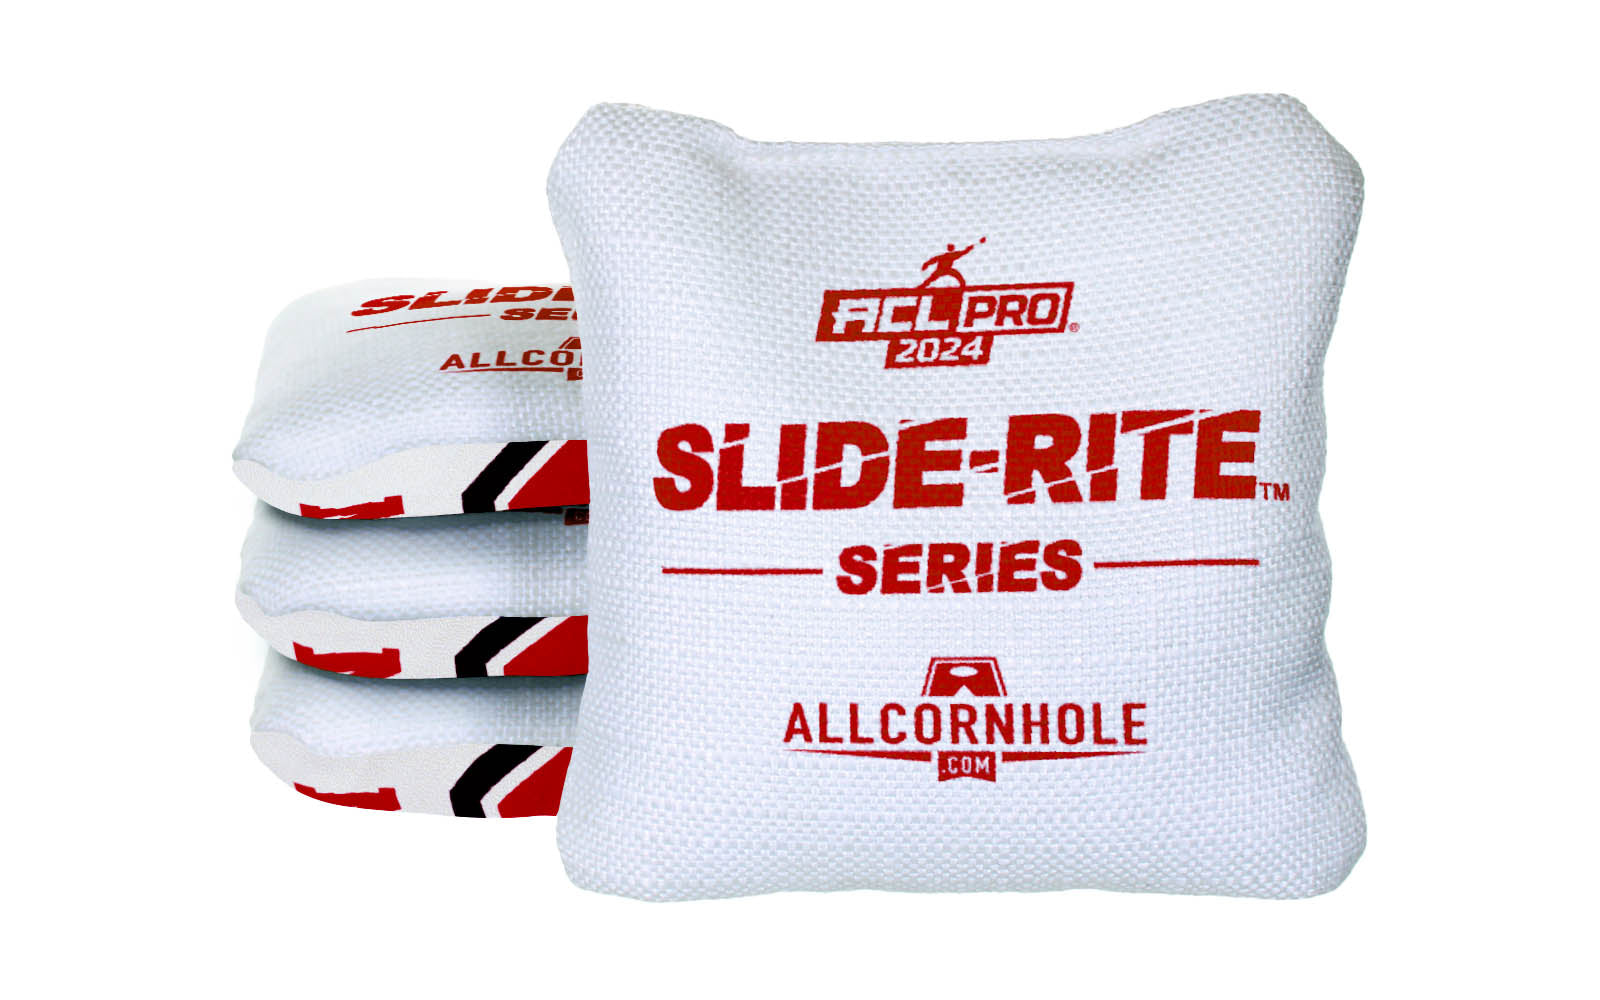 Officially Licensed Collegiate Cornhole Bags - AllCornhole Slide Rite - Set of 4 - North Carolina State University